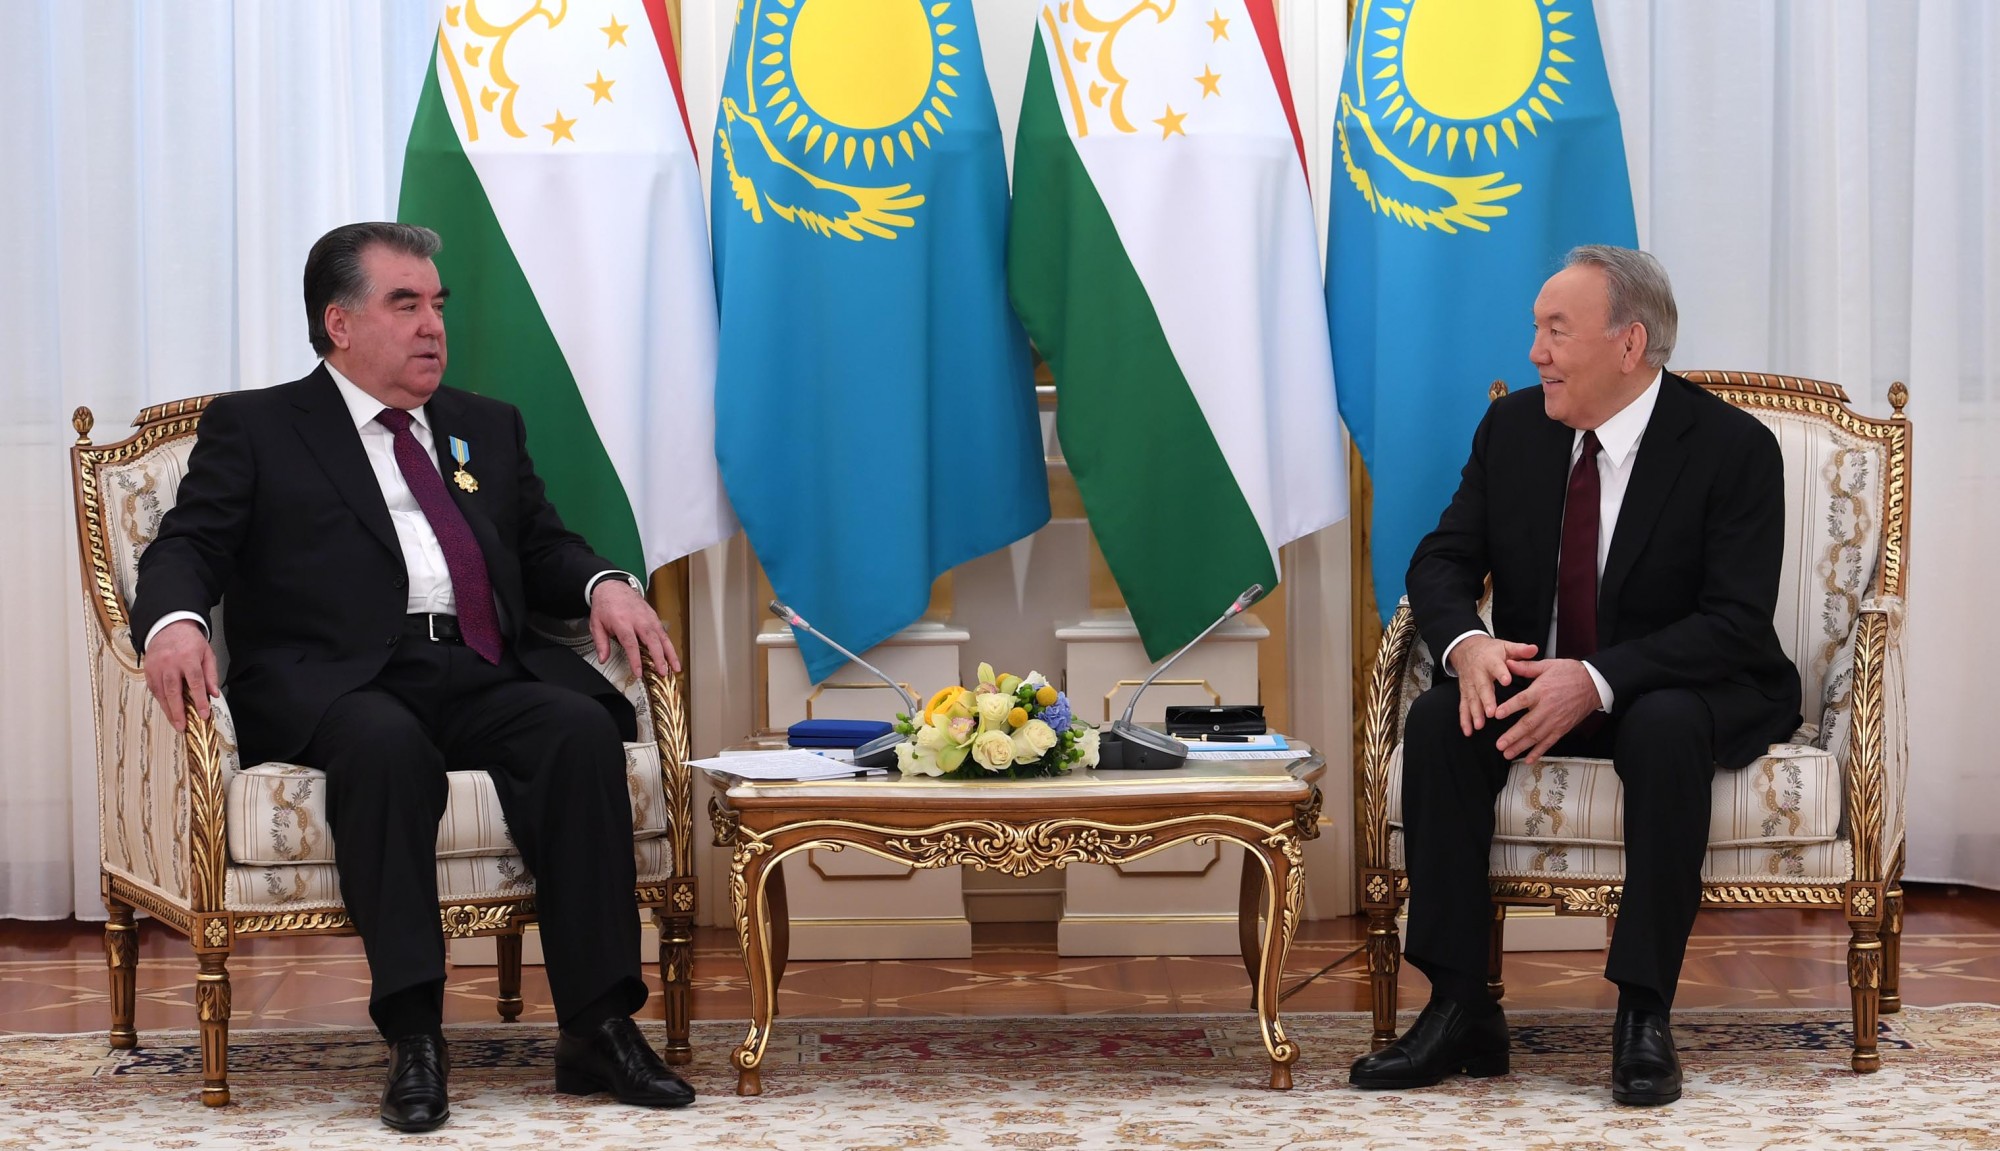 Kazakh President awarded Tajik President with Parasat Order